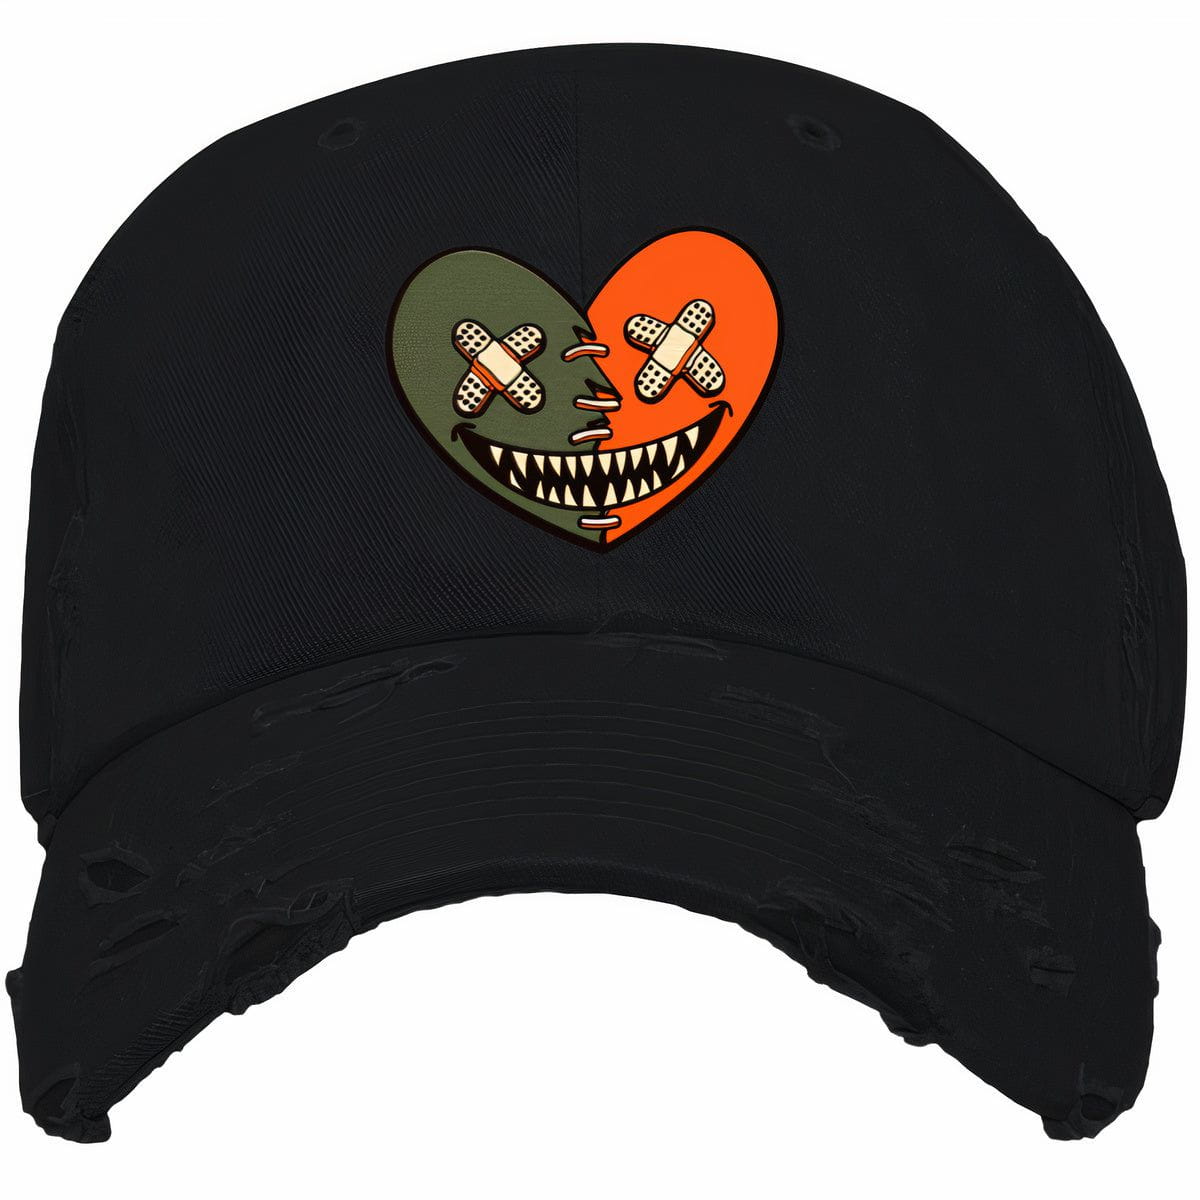 Olive 5s Hats - Jordan Retro 5 Olive Dad Hats - Miami Heart Baws